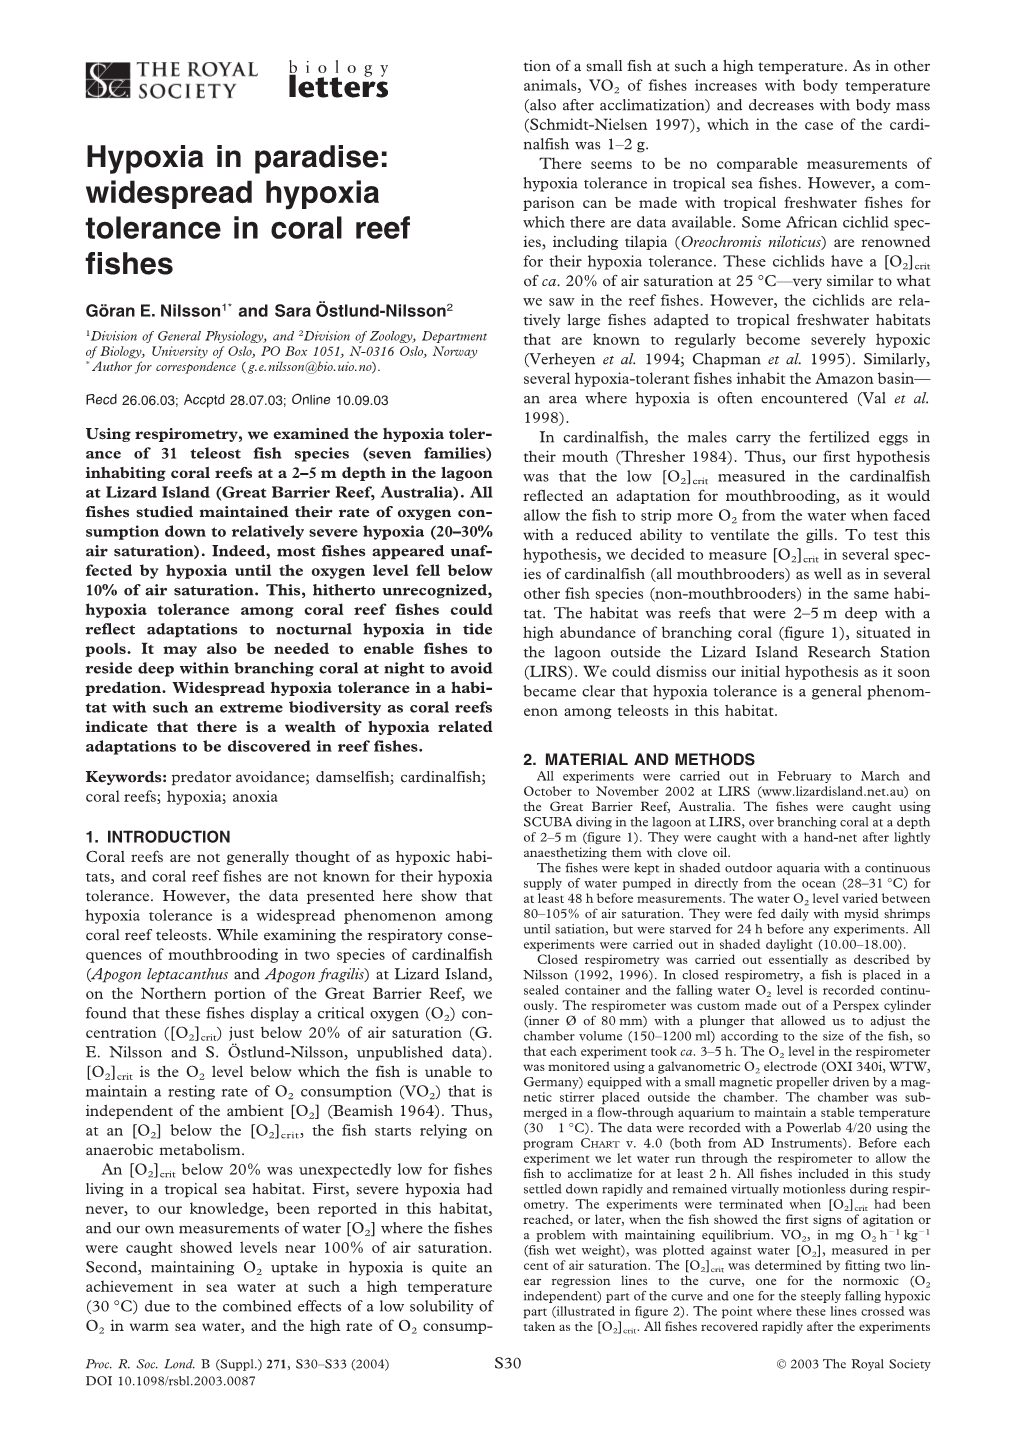 Widespread Hypoxia Tolerance in Coral Reef Fishes